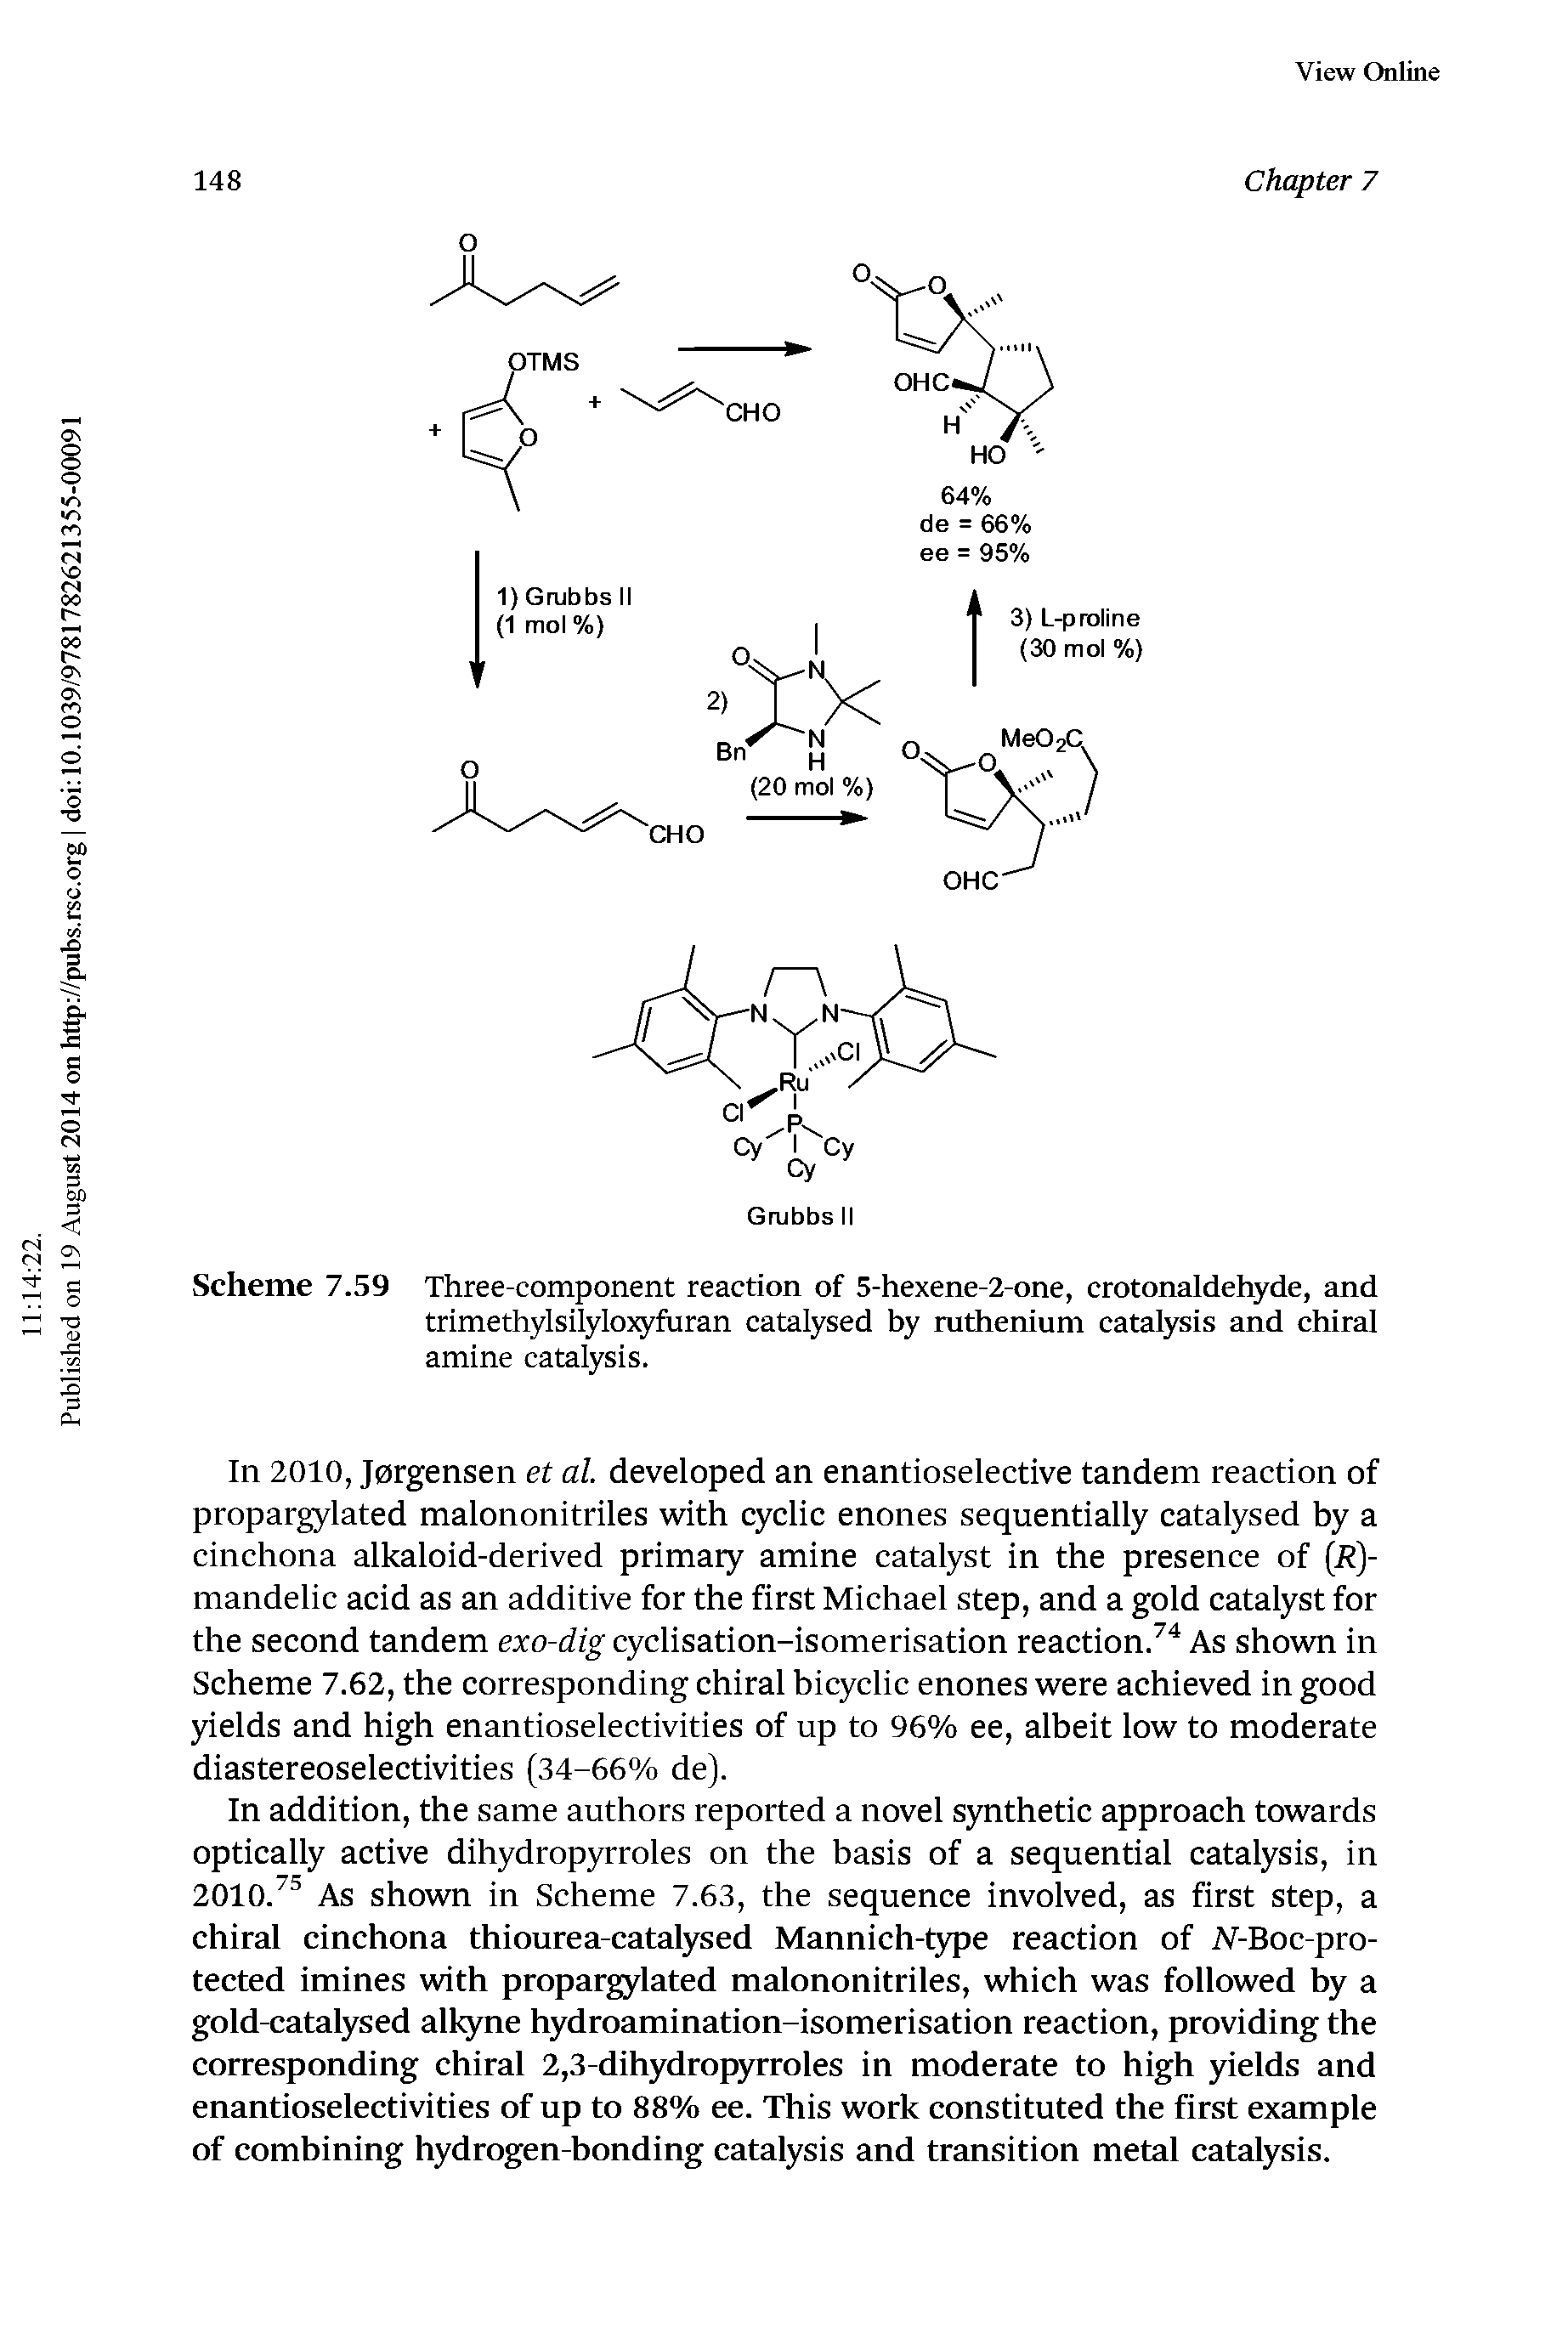 Scheme 7.59 Three-component reaction of 5-hexene-2-one, crotonaldehyde, and trimethylsilylo>yfuran catalysed by ruthenium catalysis and chiral amine catalysis.